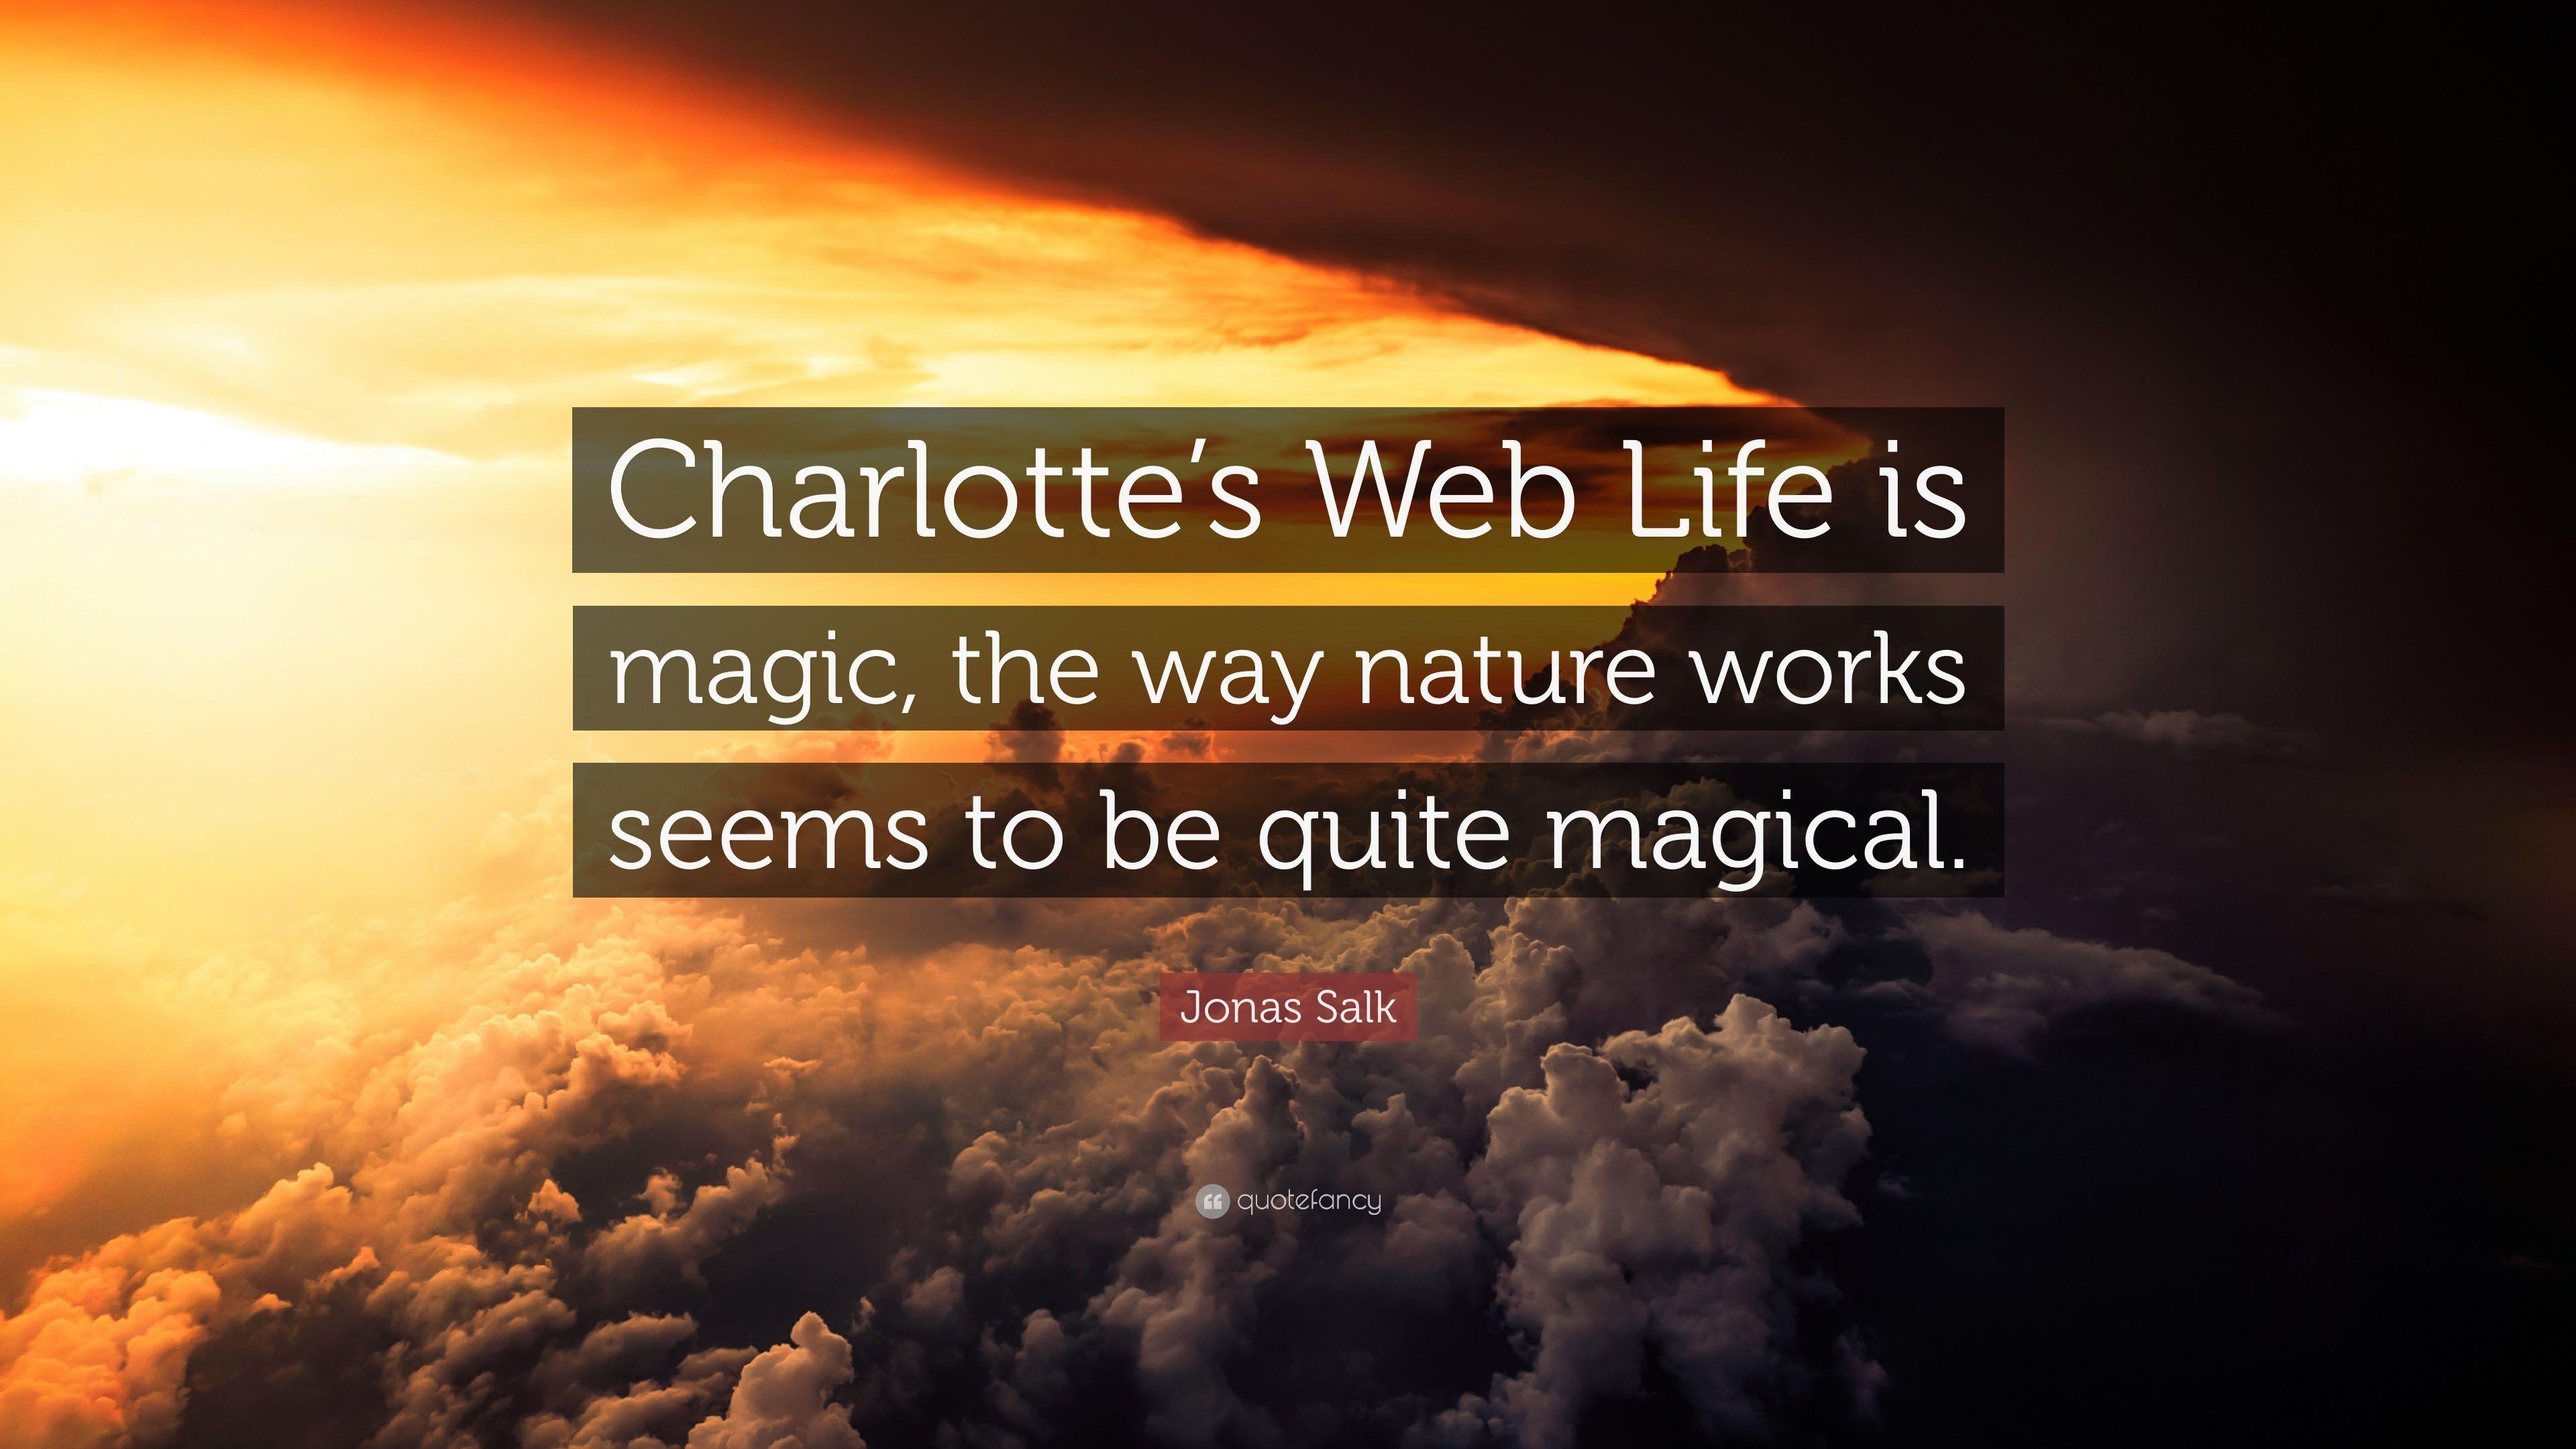 Jonas Salk Quote: “Charlotte's Web Life is magic, the way